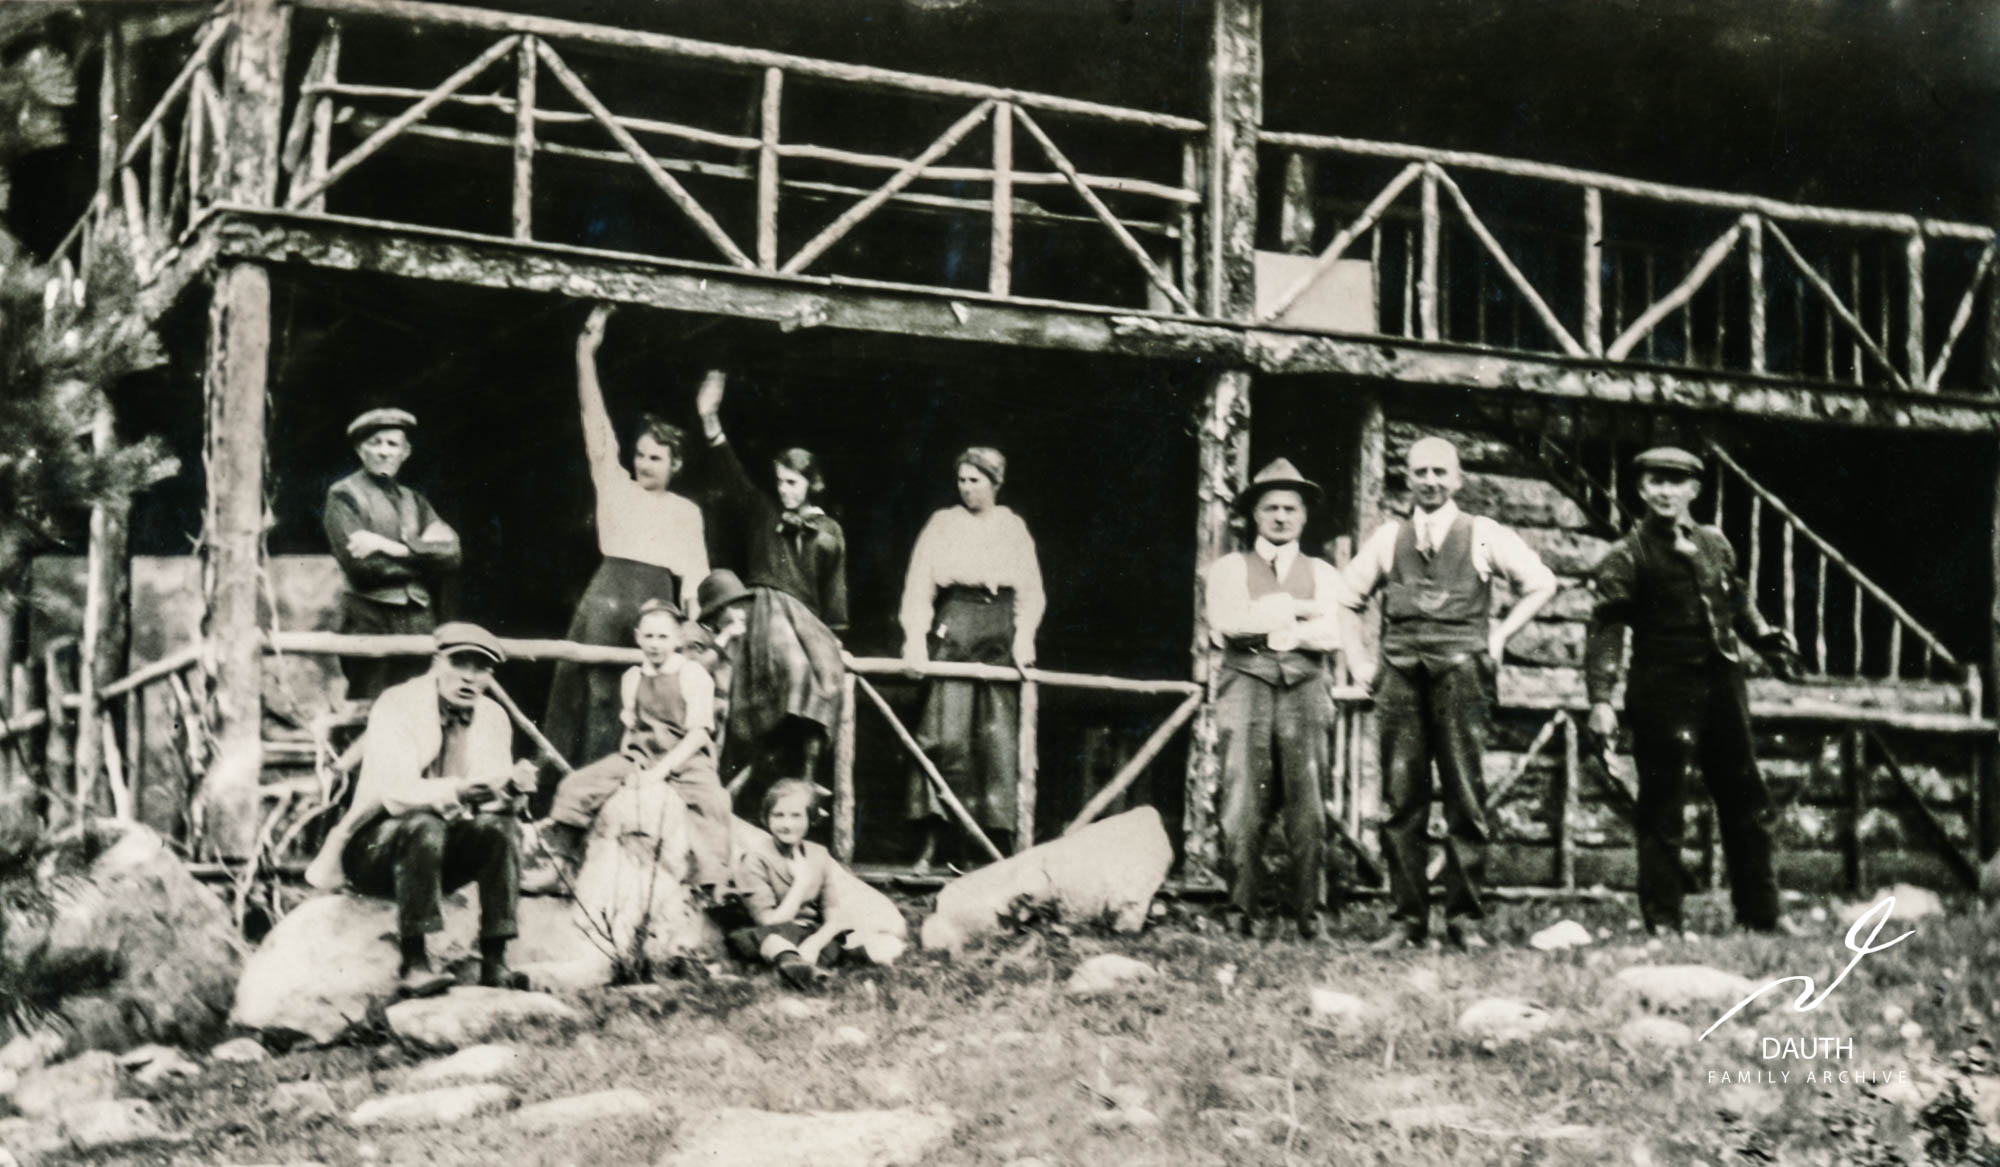 Idlewild Lodge - idlewildlodge.github.io - Circa 1921 - The Dauths at Idlewild Lodge with family freinds